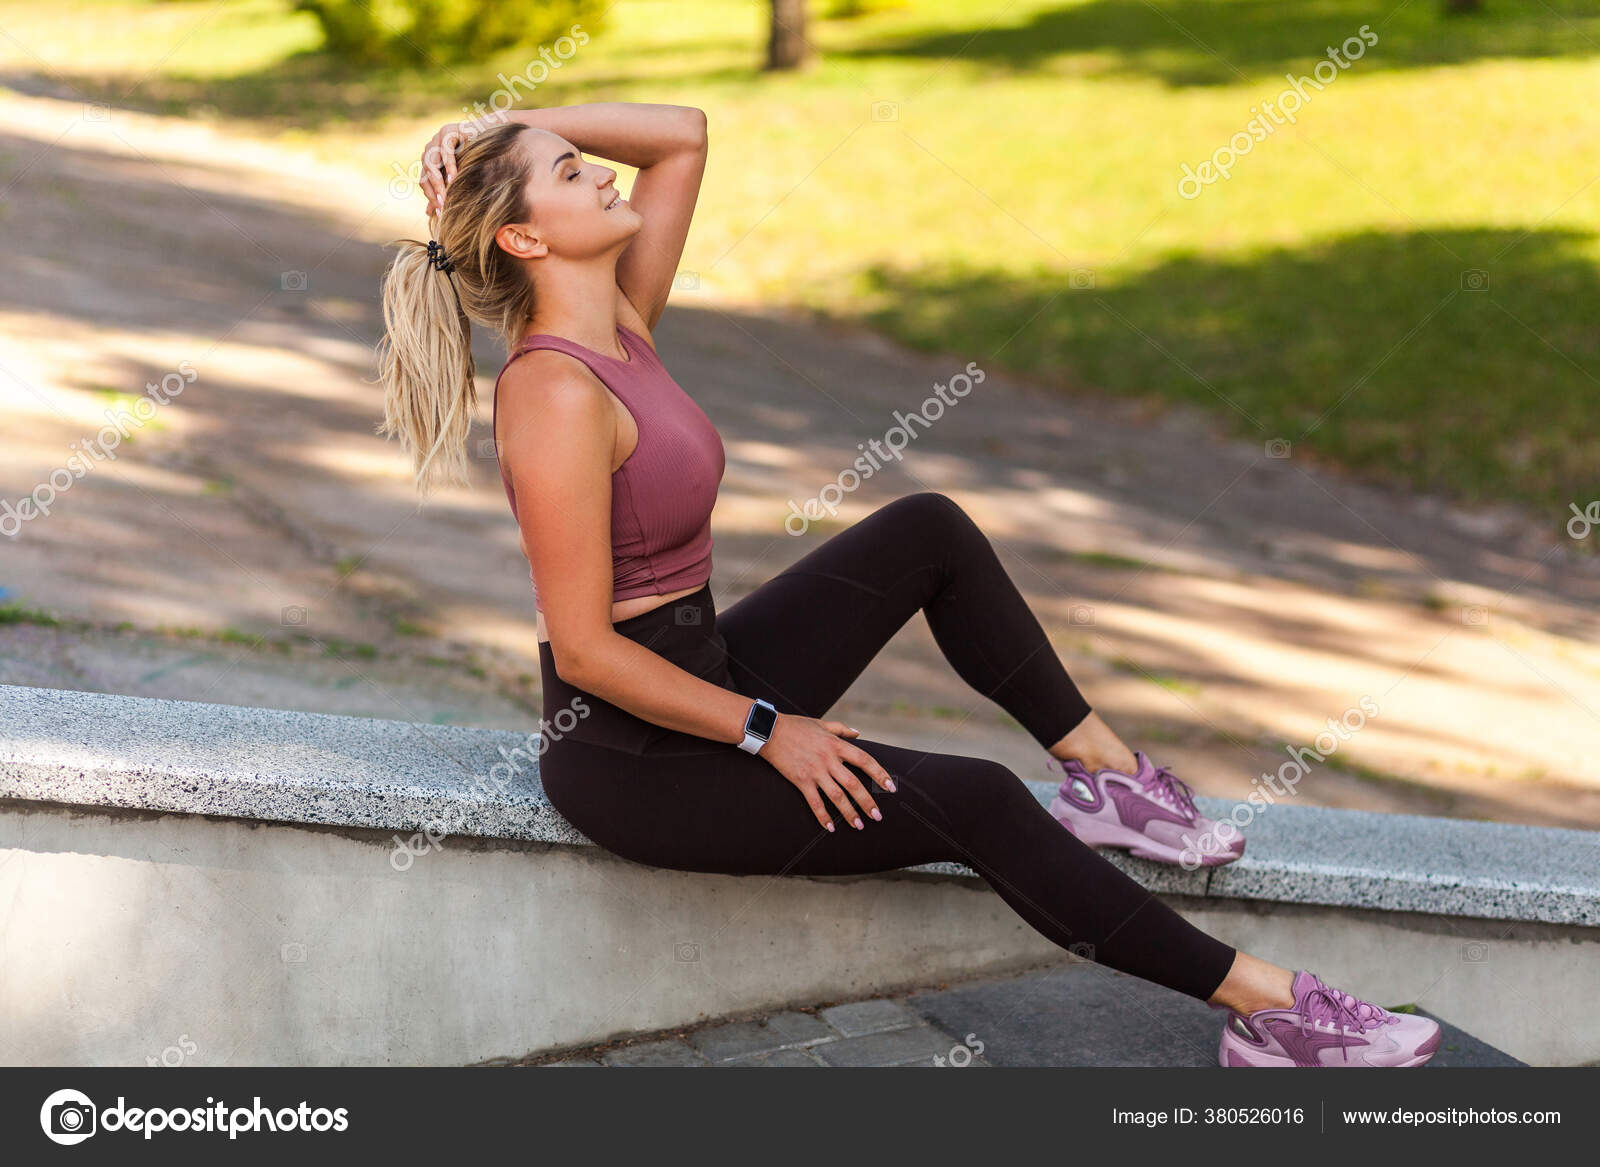 Athletic Woman Yoga Pants Sitting Stairs Taking Break Stock Photo ©khosrork 380526016